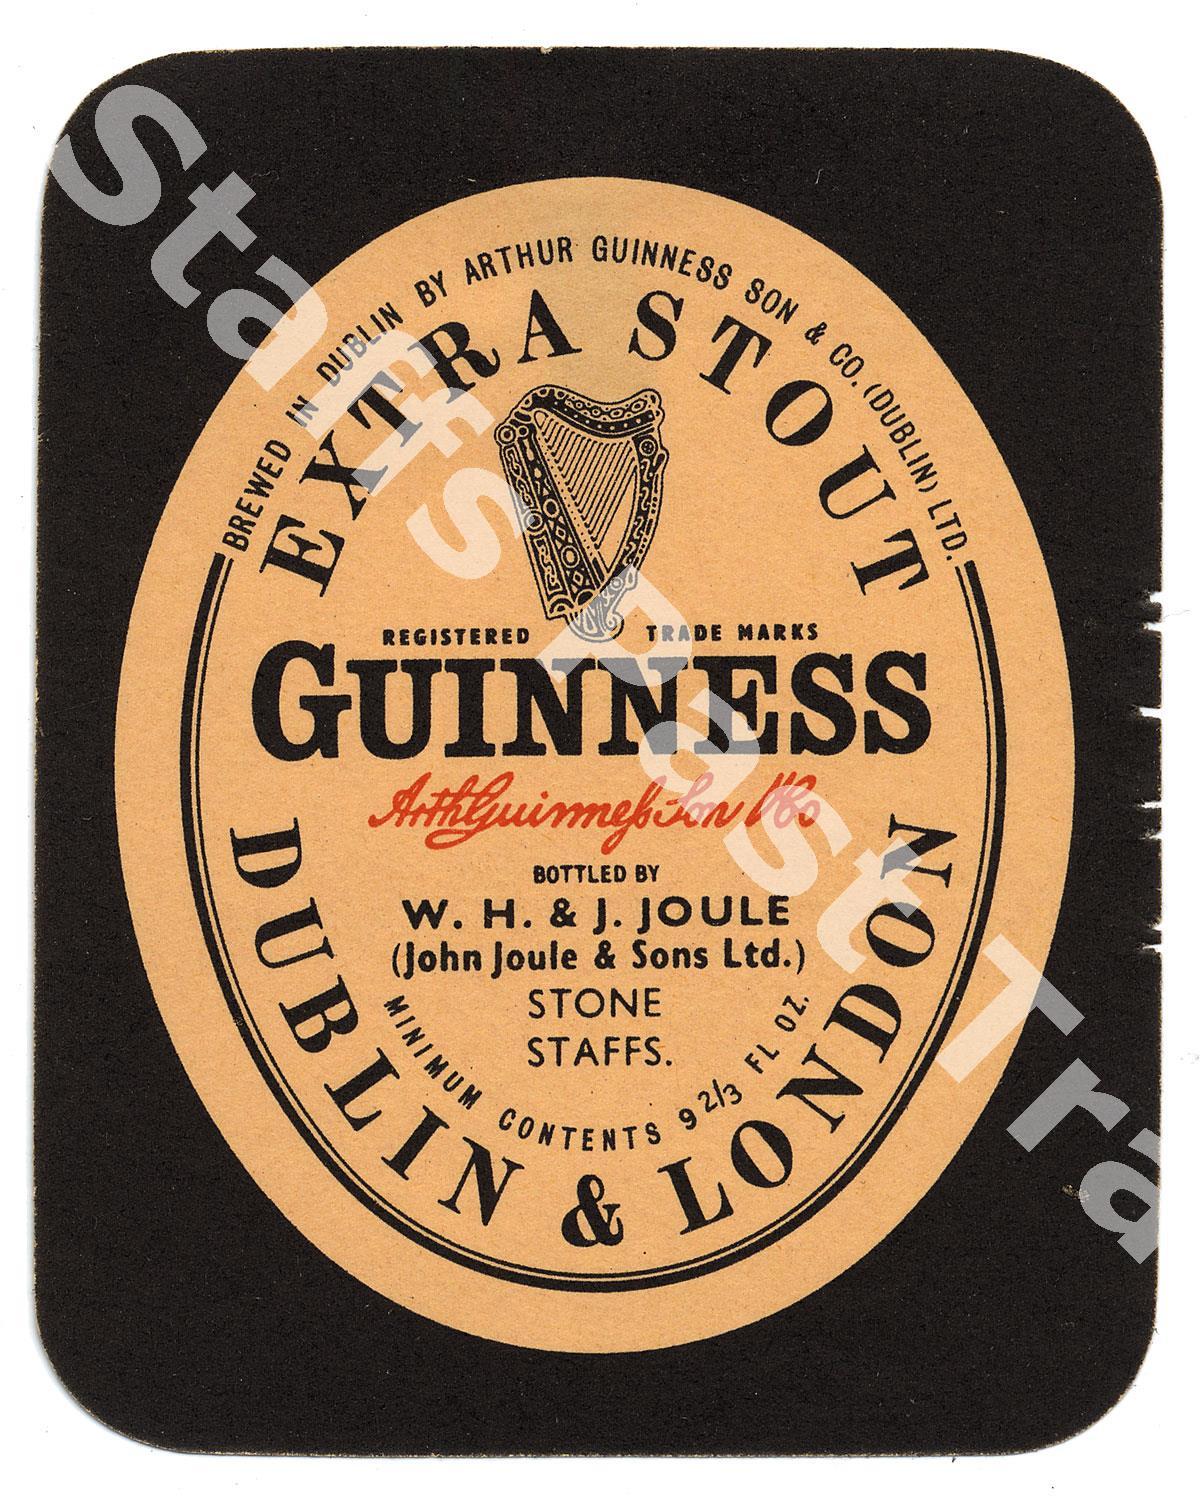 Guinness Bottle Logo - Exhibition Details - Staffordshire Past Track